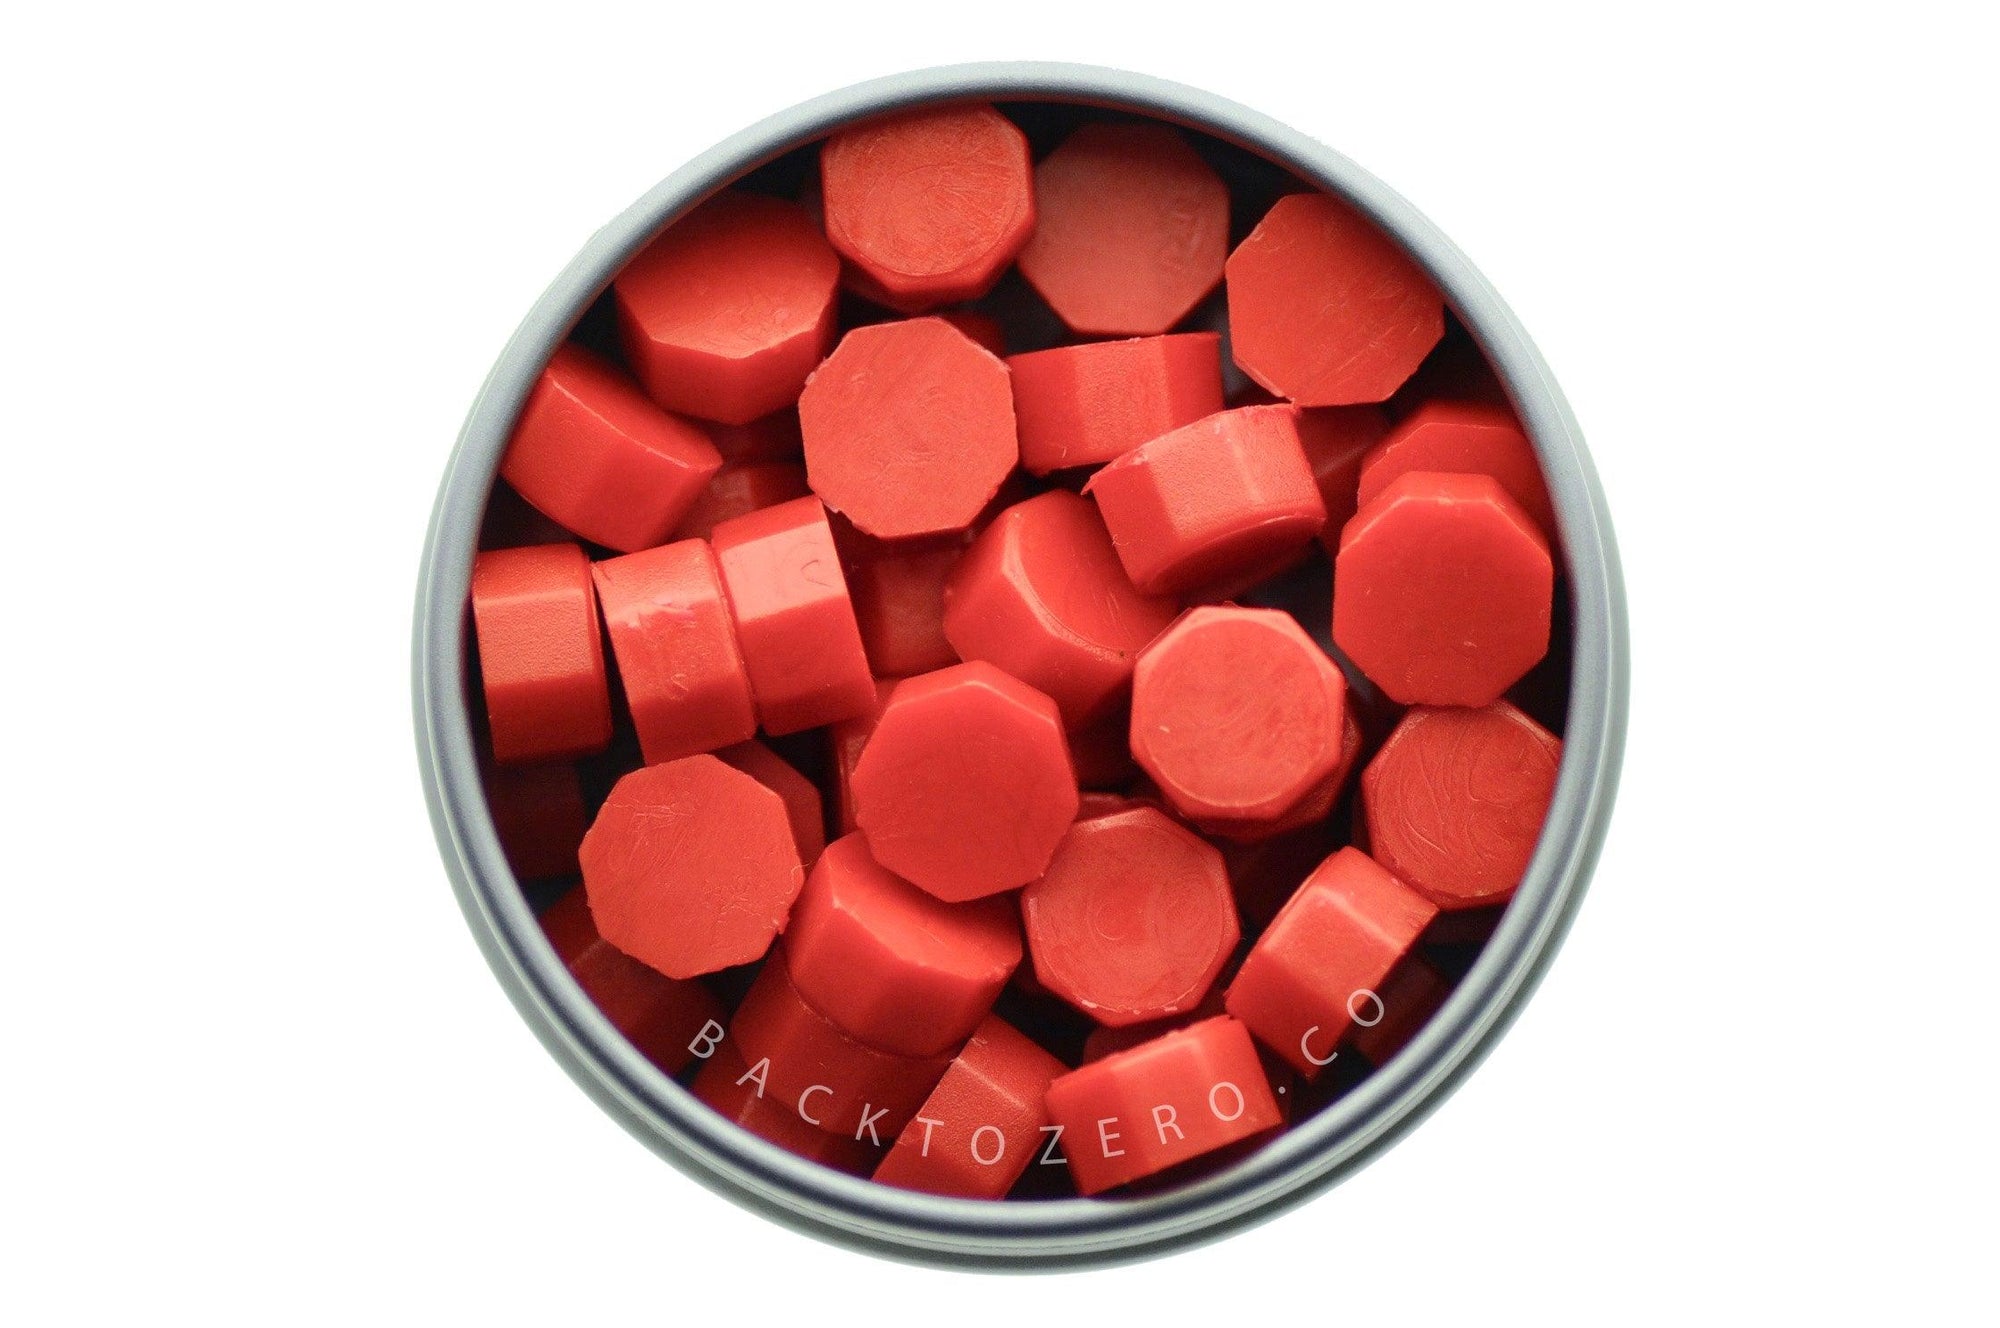 Rose Red Octagon Sealing Wax Beads - Backtozero B20 - octagon bead, Red, sealing wax, tin, Wax Beads